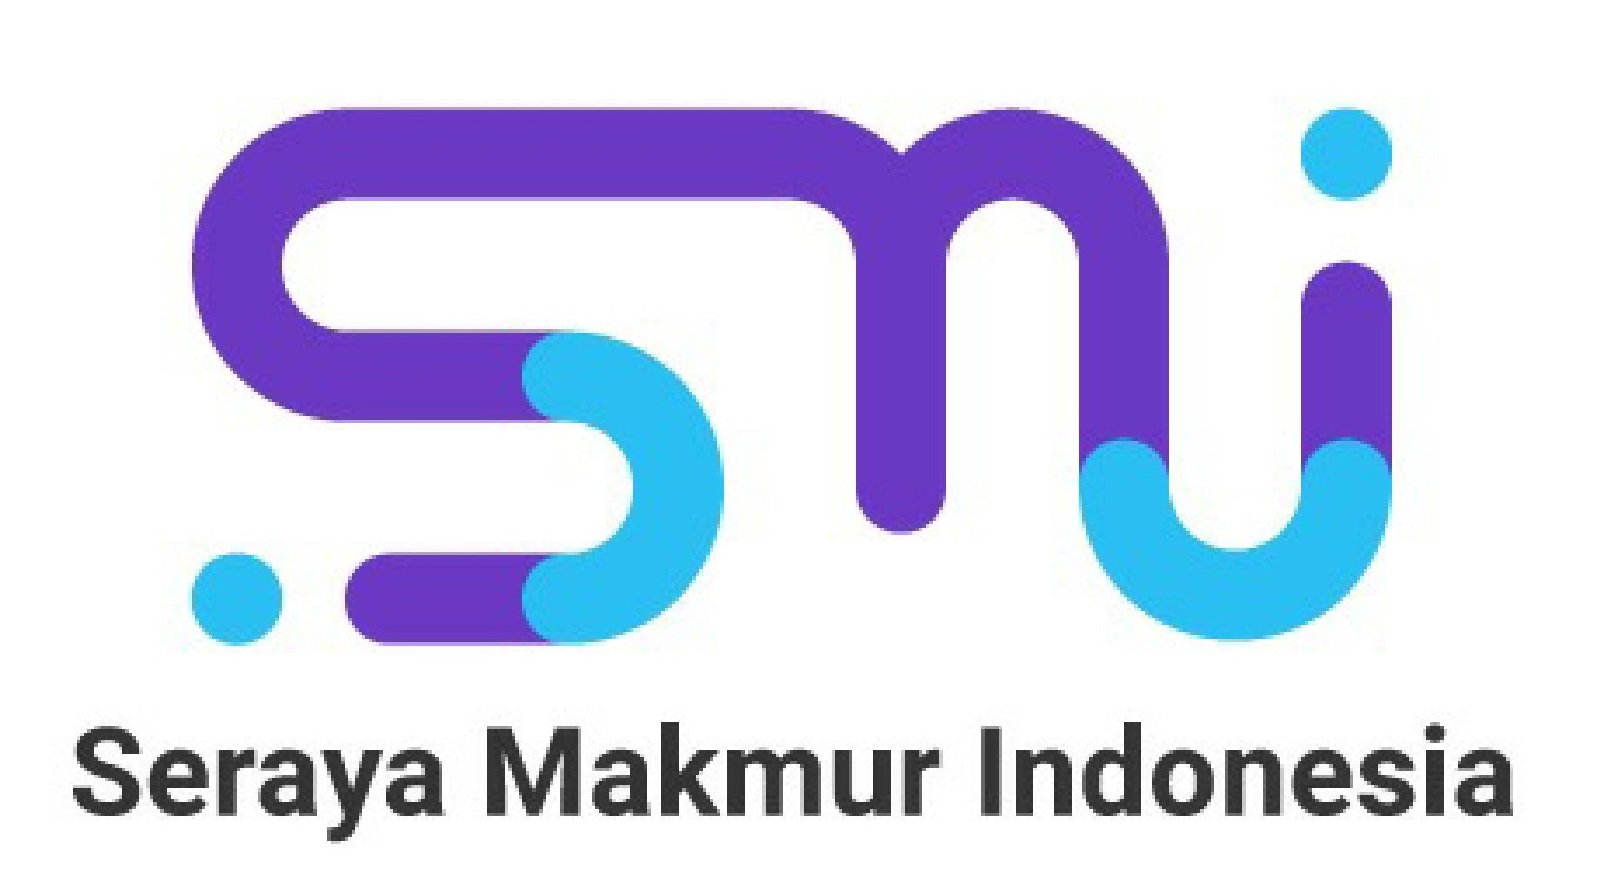 Lowongan Kerja PT Seraya Makmur Indonesia (SMI) Tangerang – Serangkab.info